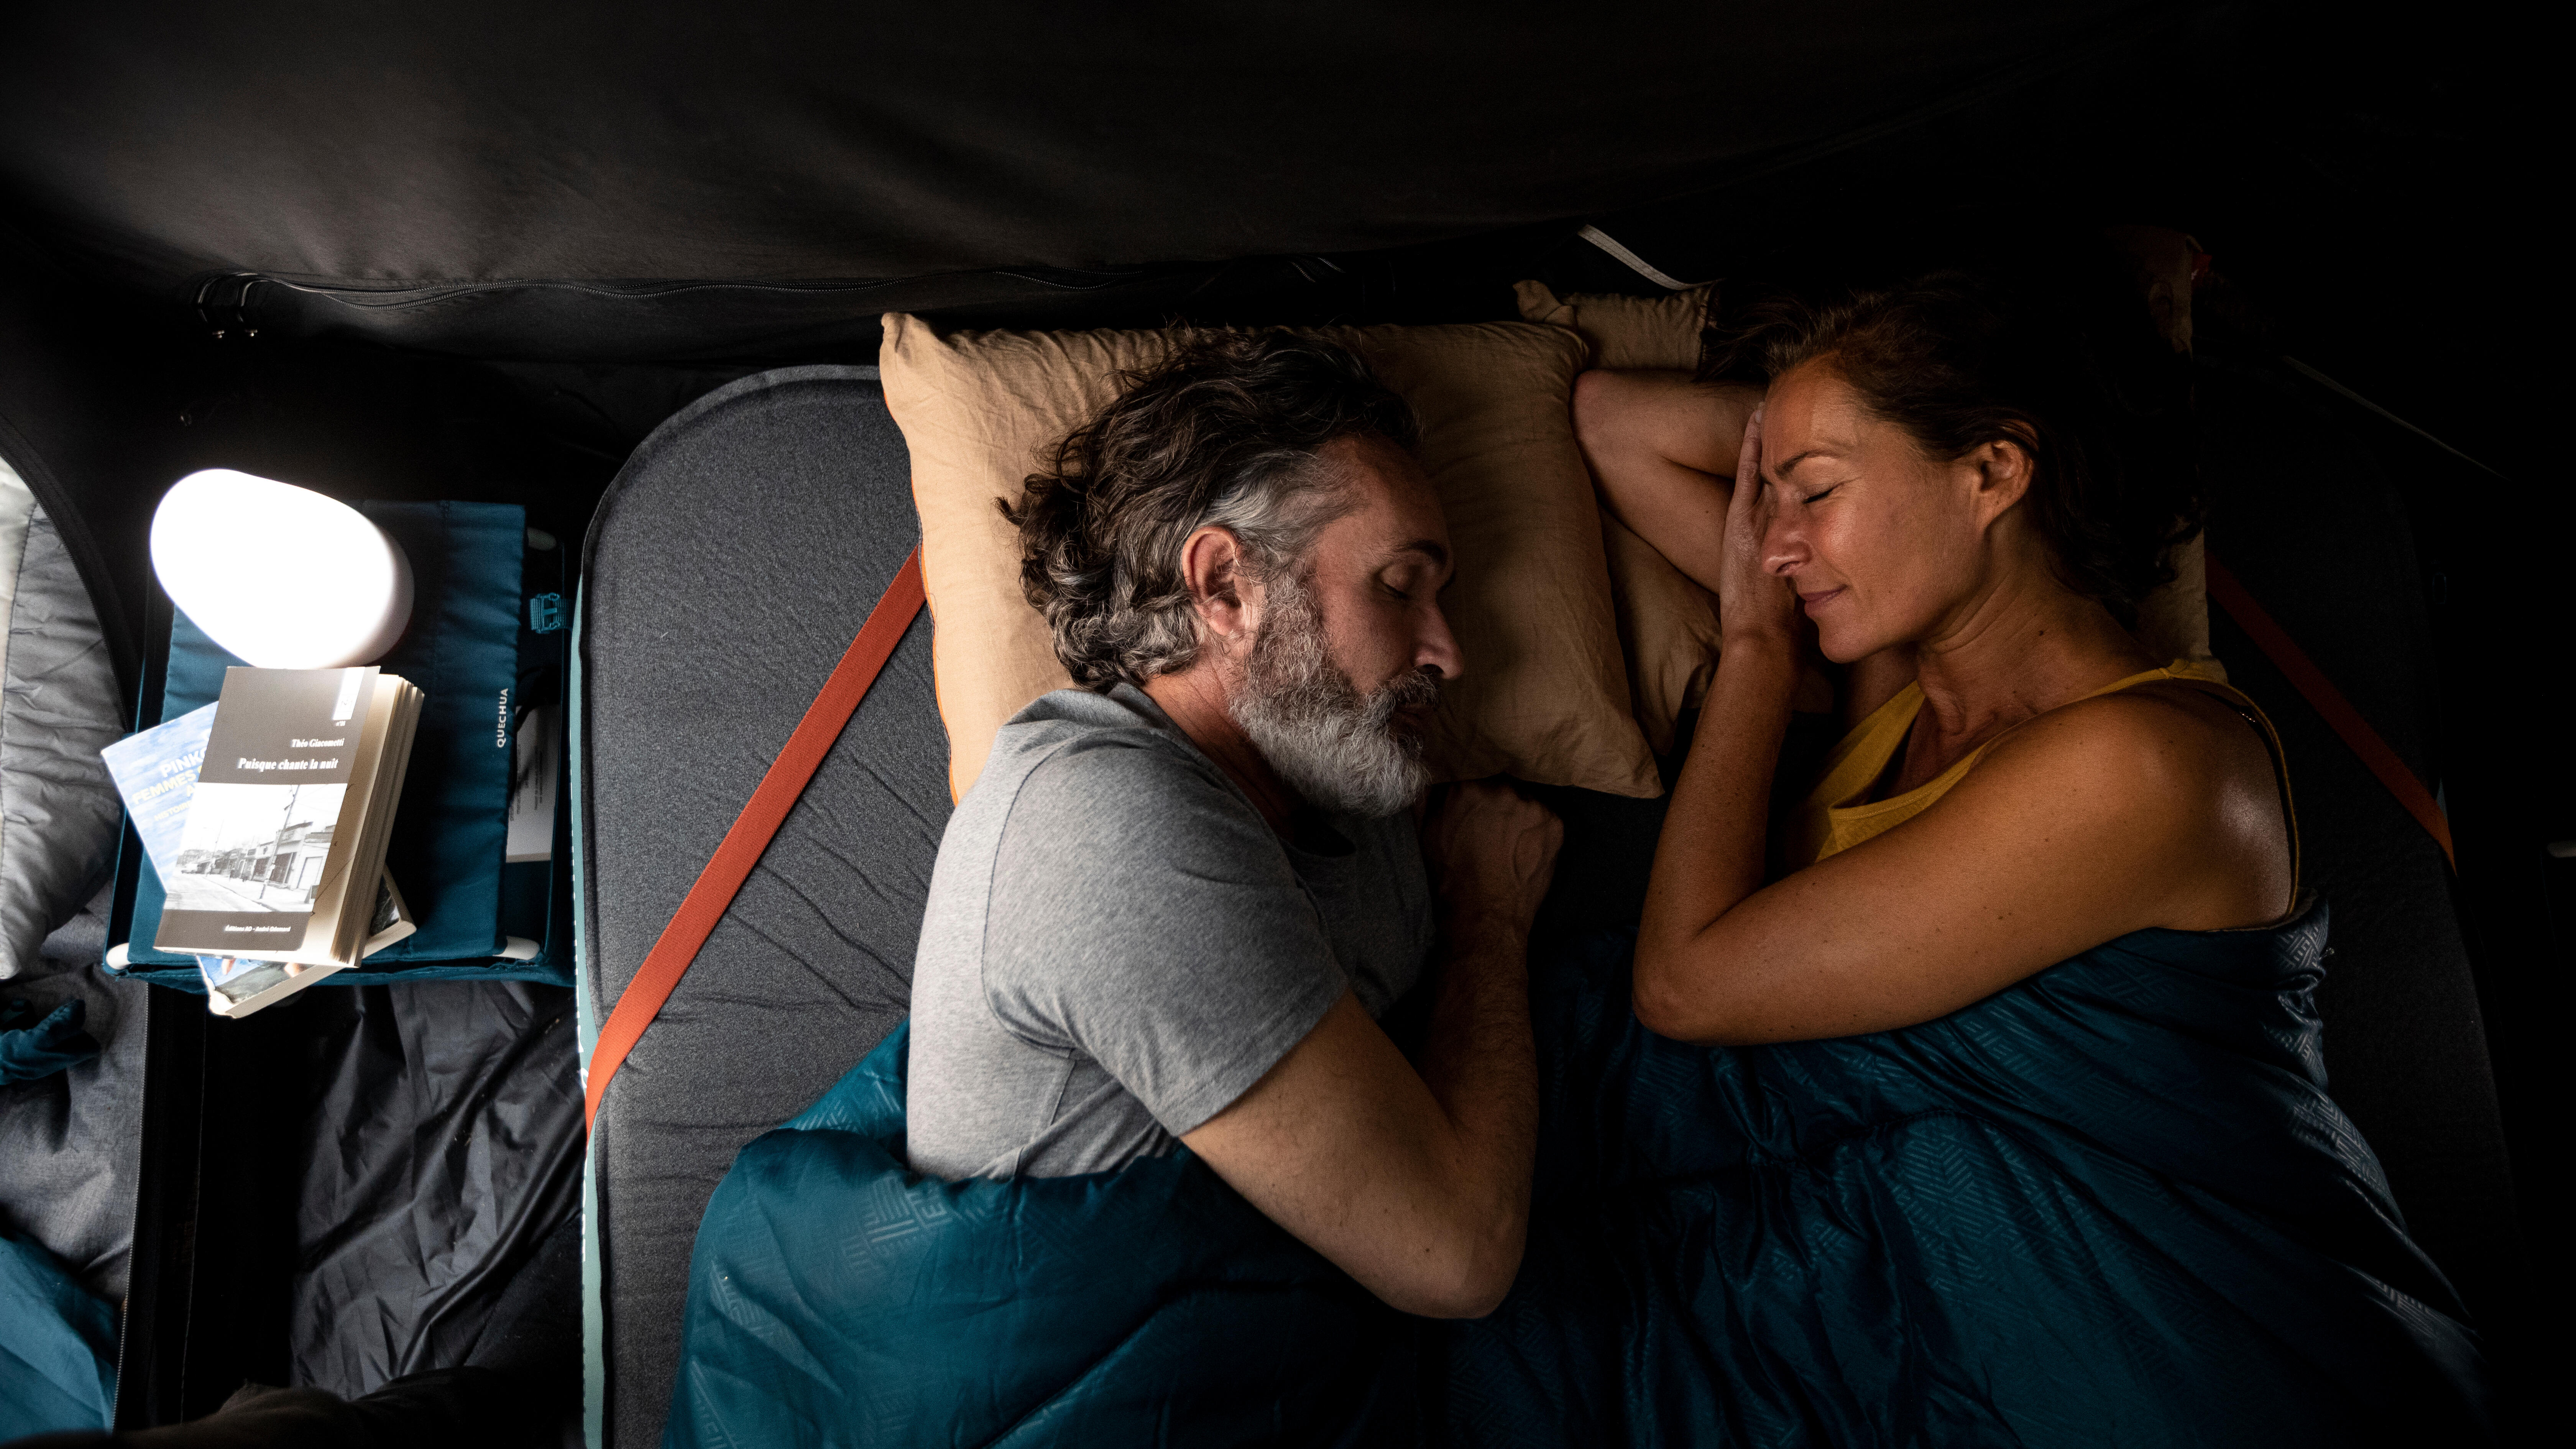 Double Camping Sleeping Mat - Ultim Comfort - QUECHUA